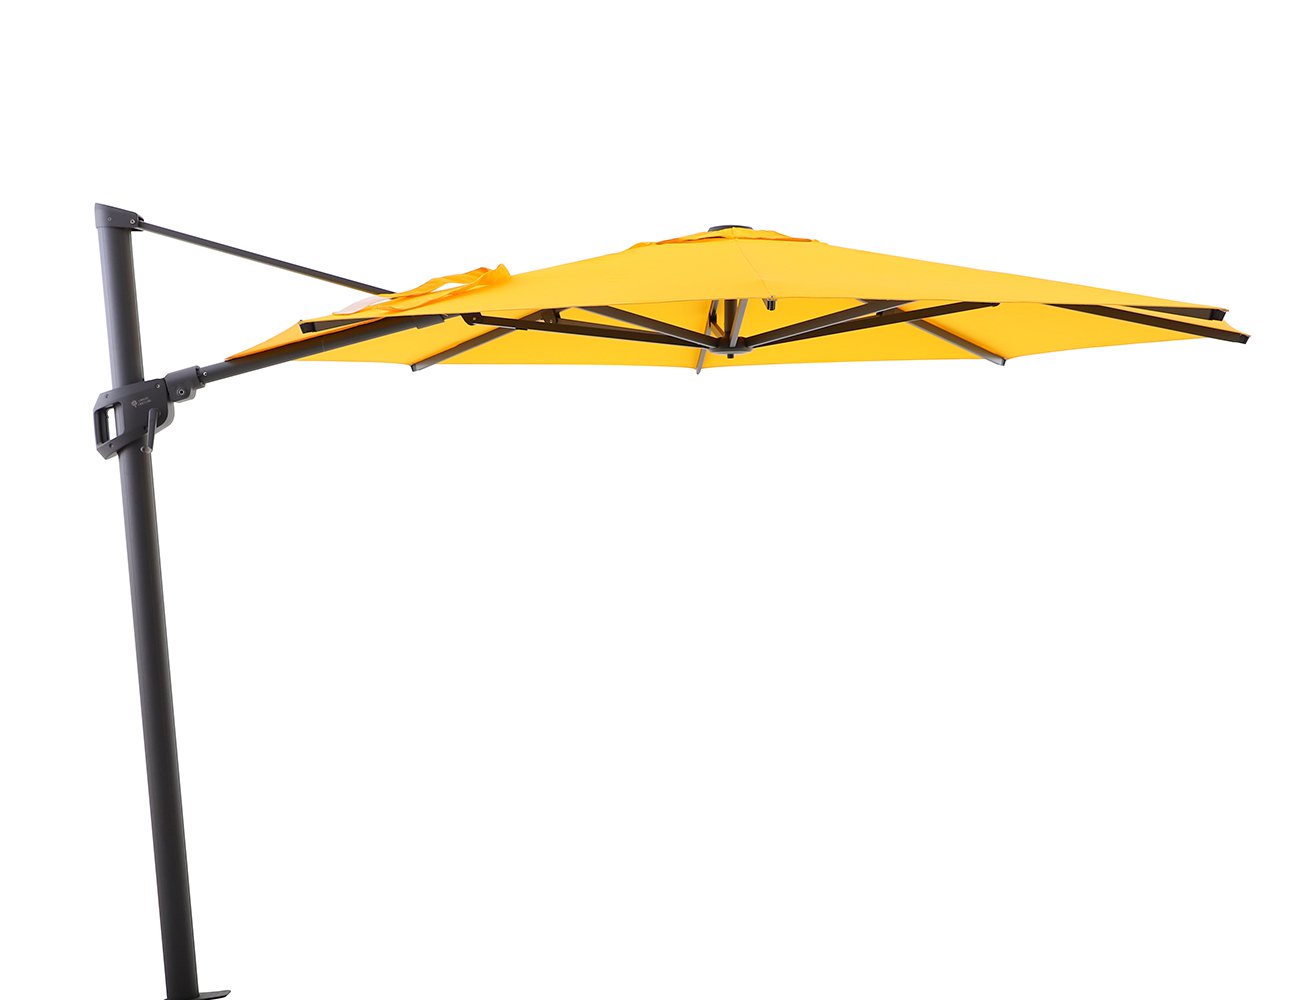 3m Cantilever Umbrella - Yellow